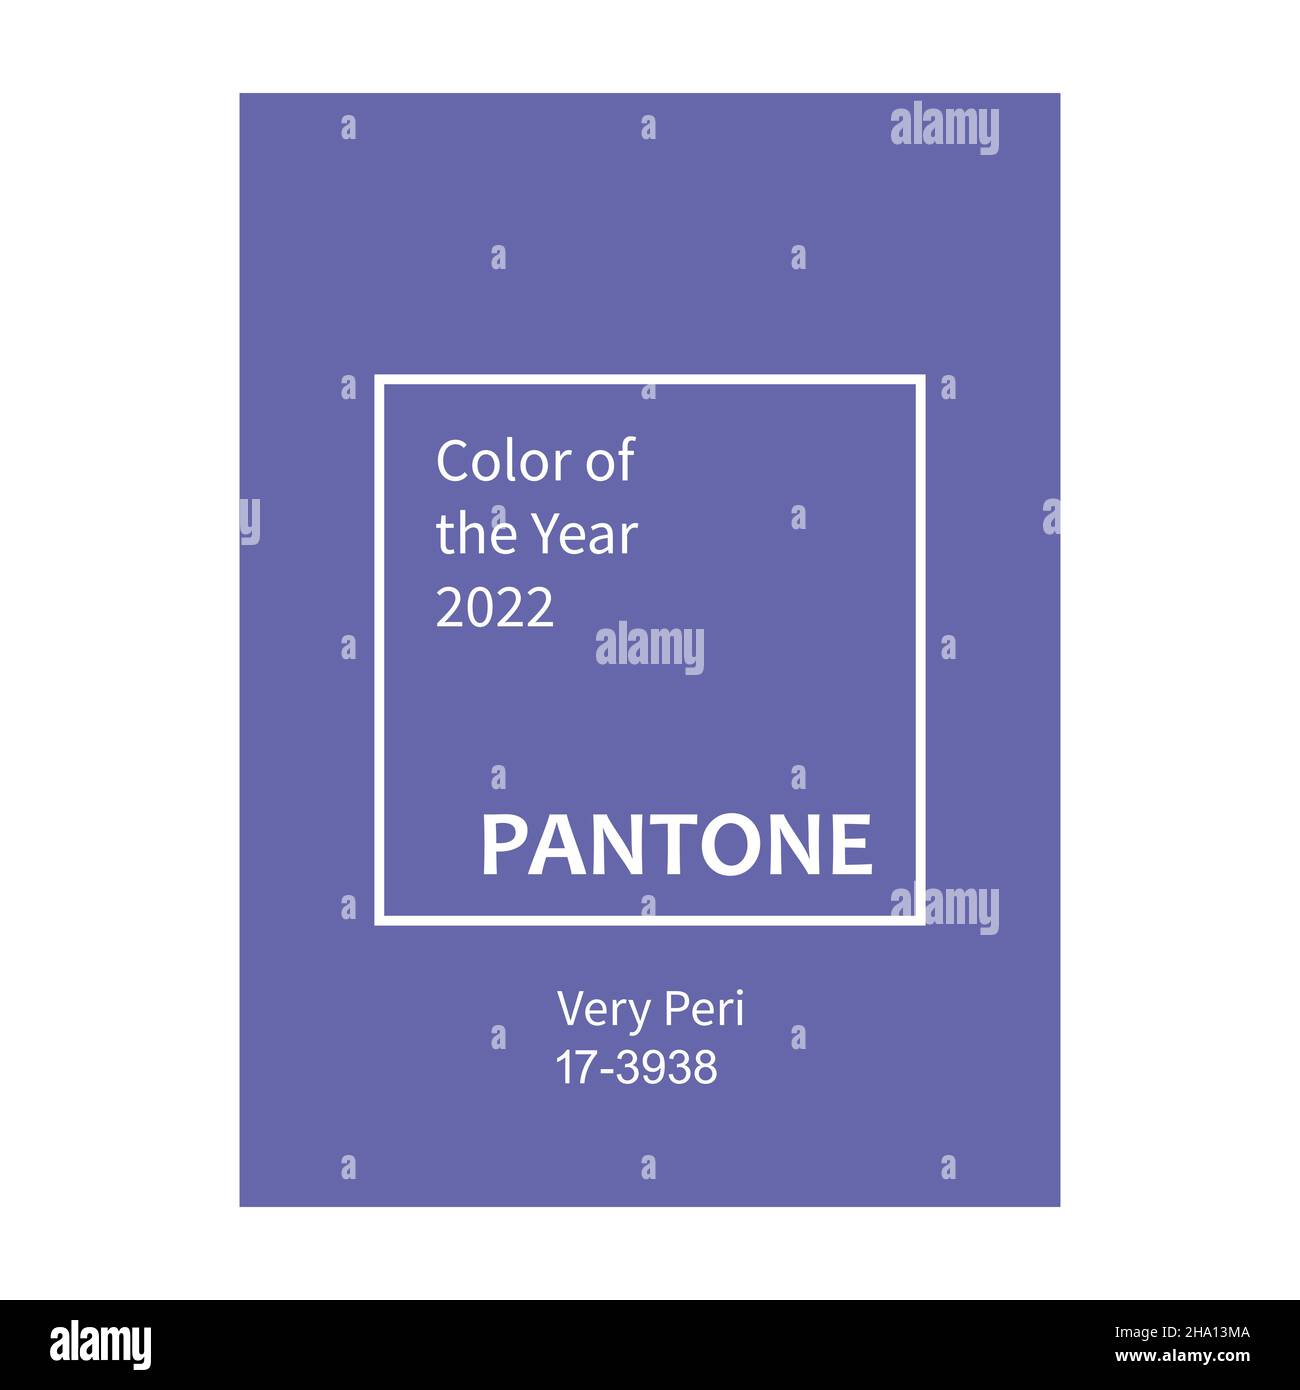 Vinnytsia, Ukraine - 9. Dezember 2021: Pantone Very Peri Trending Color of the Year 2022. Vektordarstellung auf weißem Hintergrund isoliert Stock Vektor